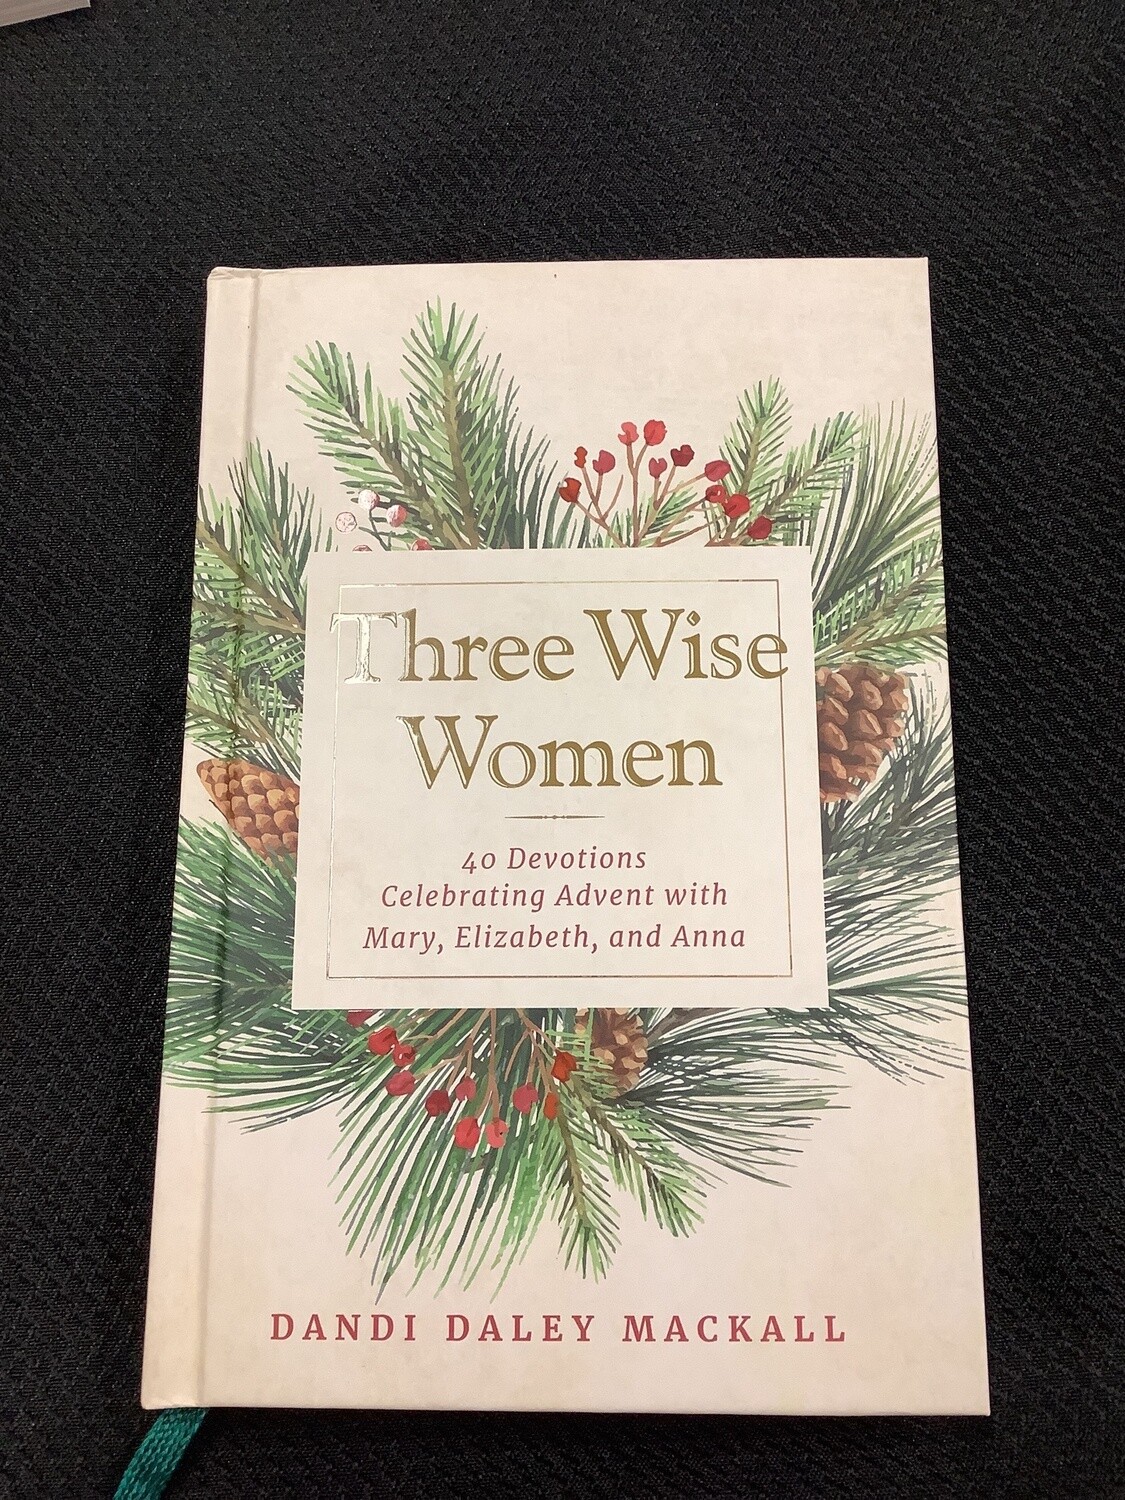 Three Wise Women 40 Devotions Celebrating Advemt with Mary, Elizabeth, and Anna - Dandi Daley Mackall